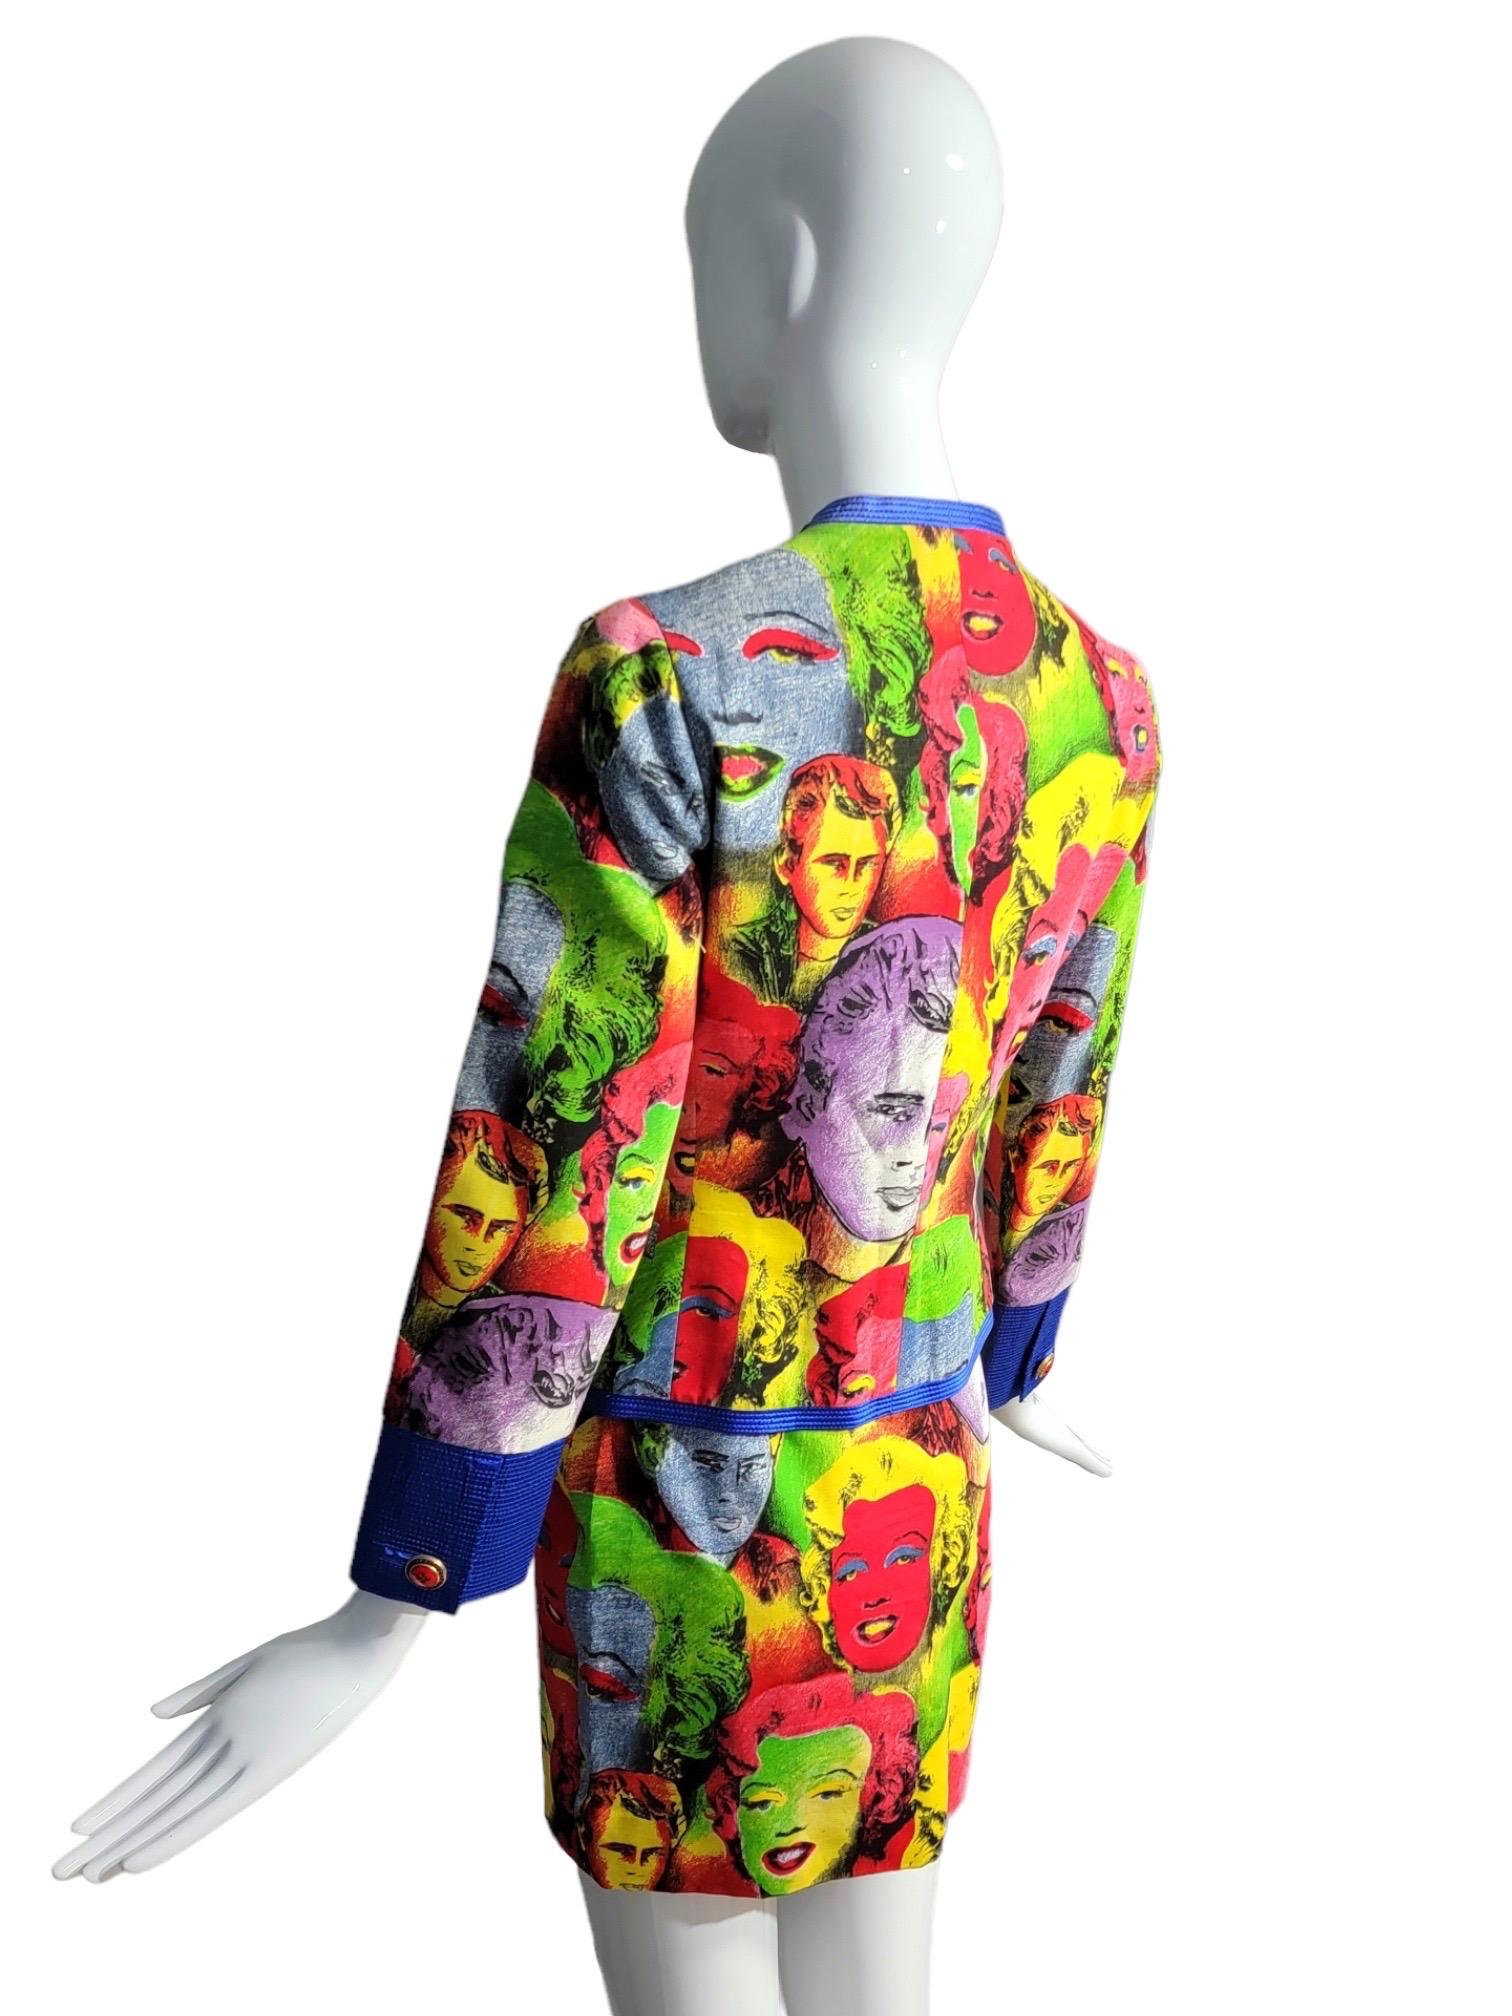  S/S 1991 Gianni Versace Marilyn Monroe Pop Art Warhol Skirt Suit For Sale 7